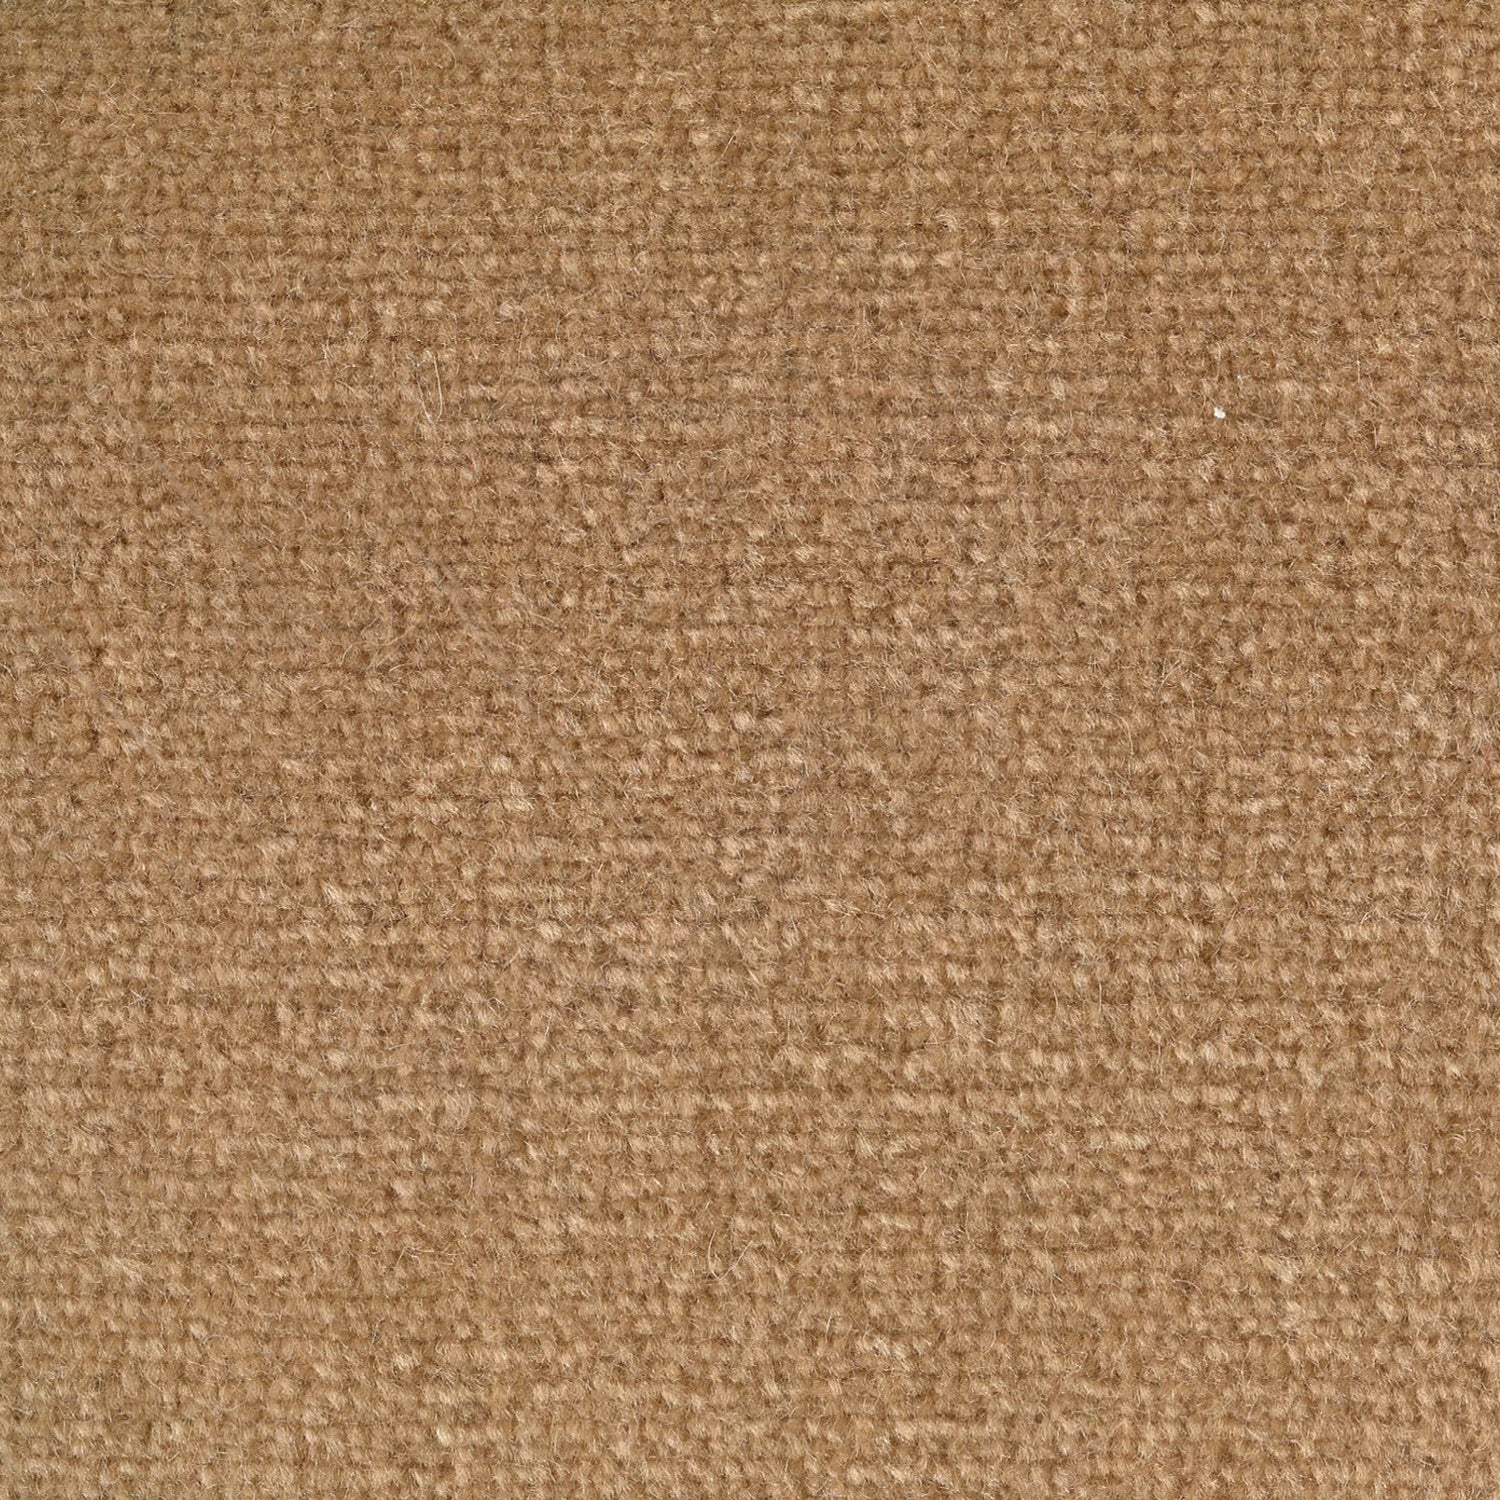 Wool broadloom carpet swatch in a high-pile weave in a solid light brown colorway.